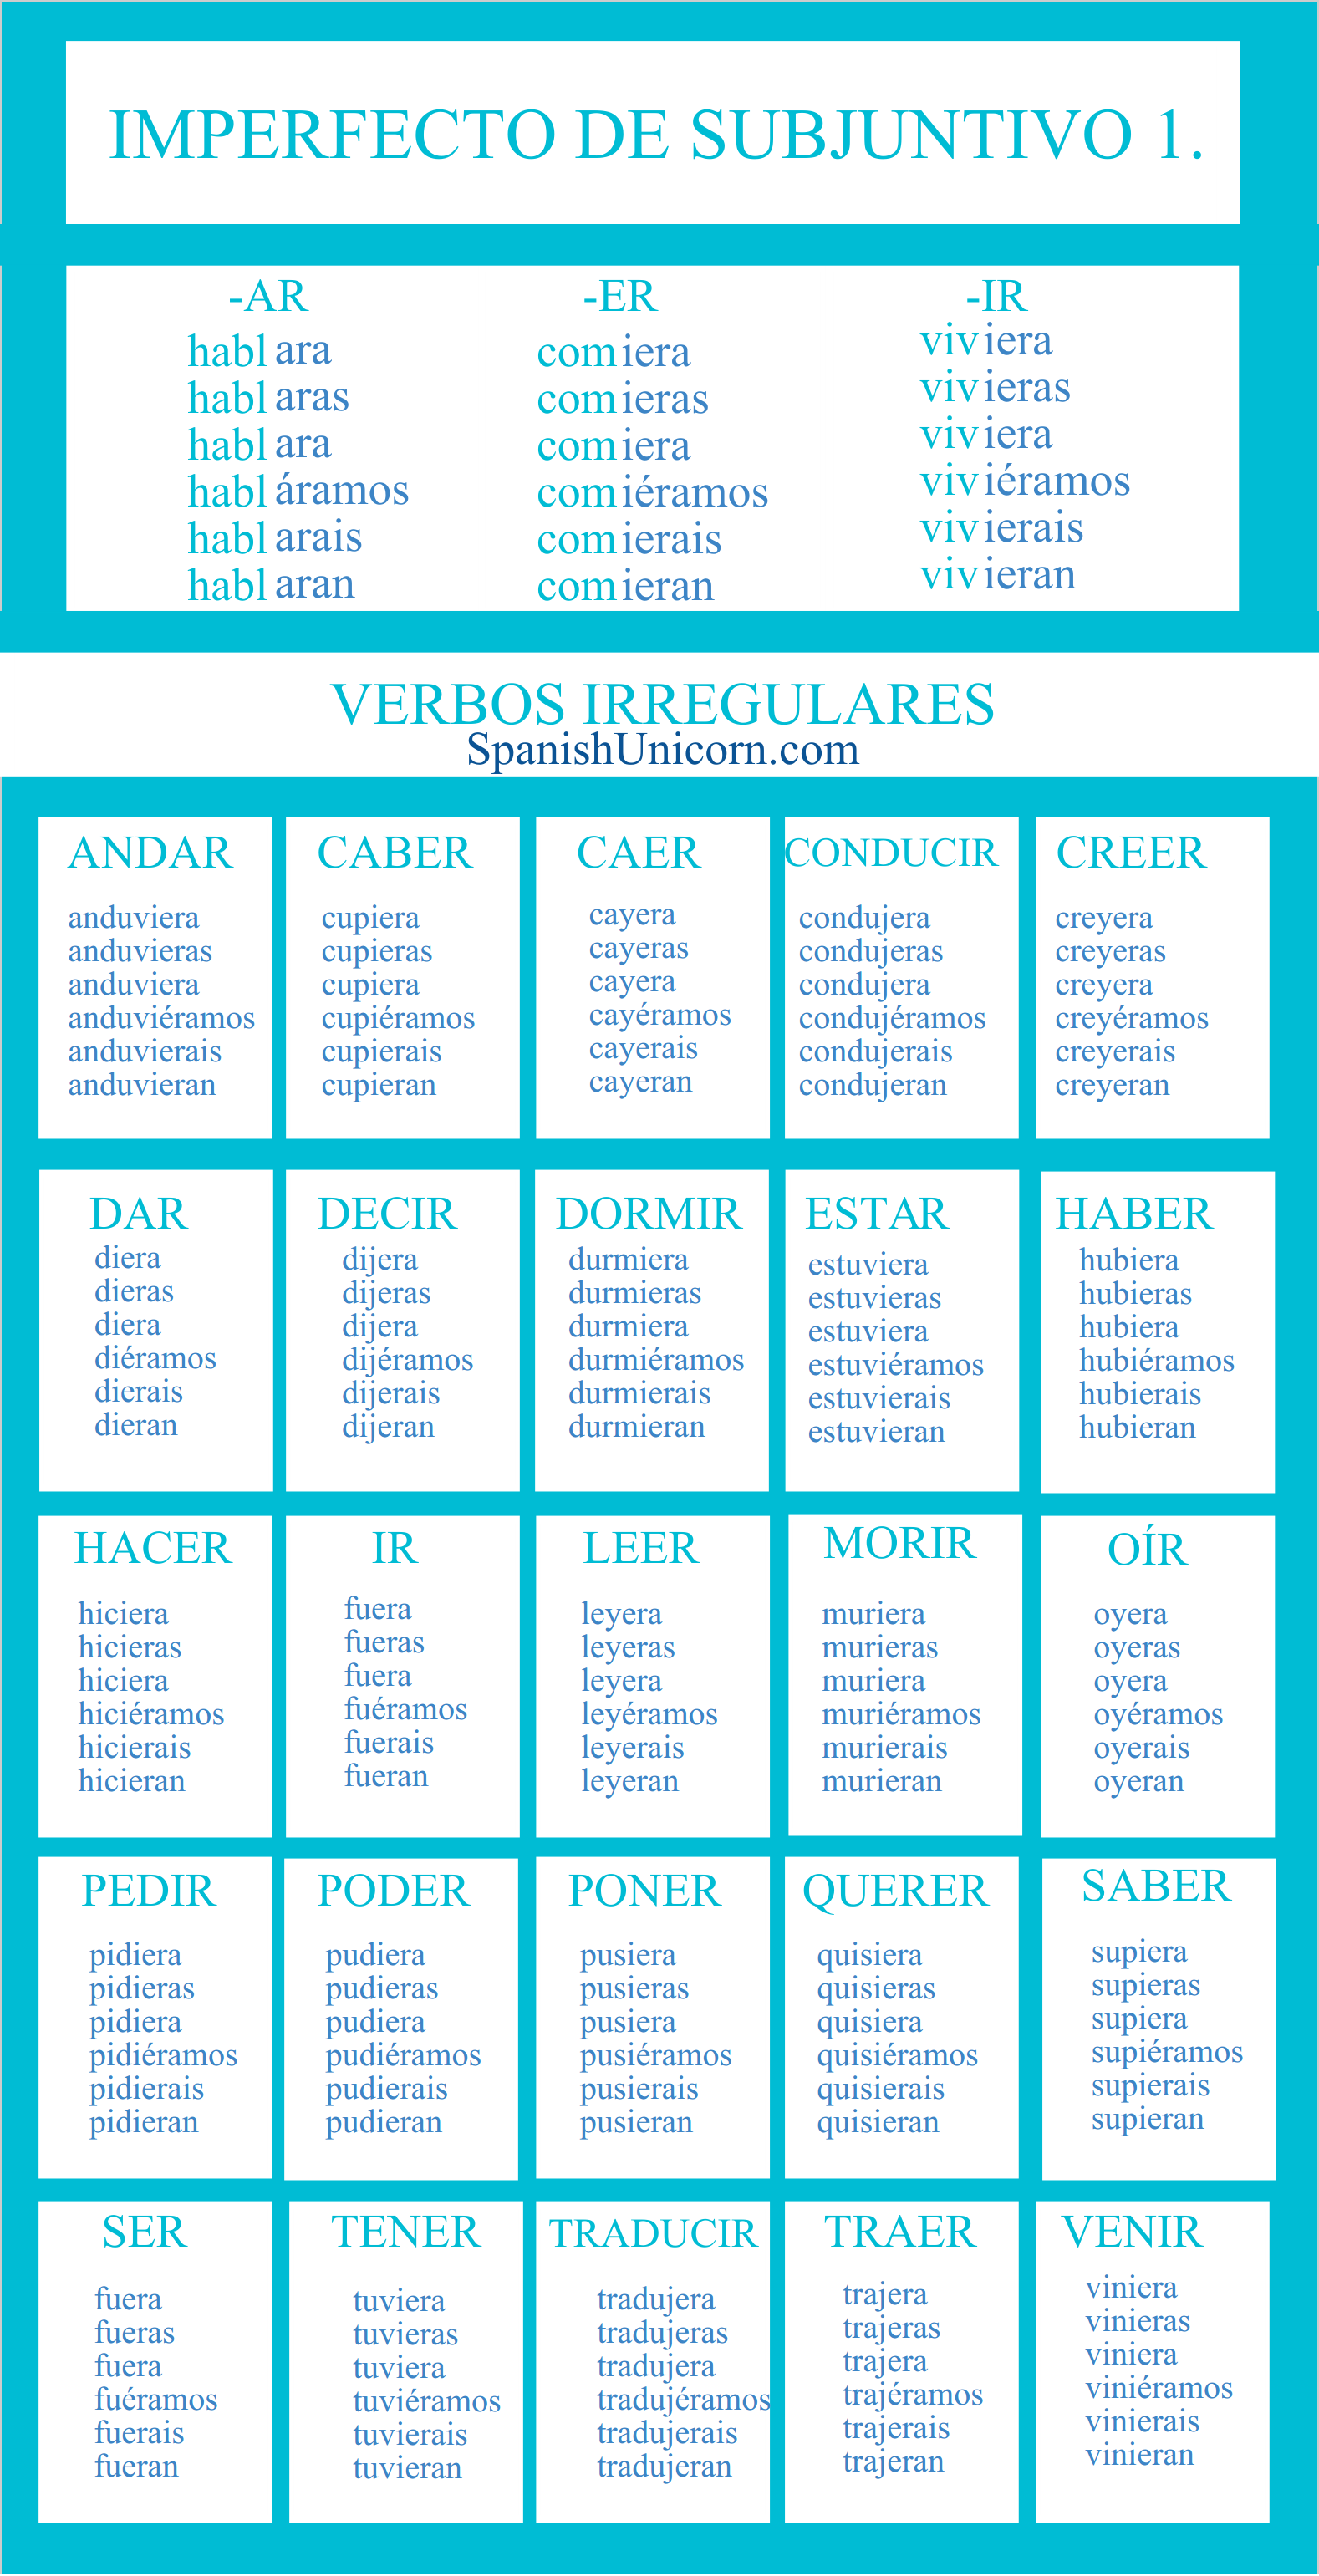 conjugacion-irregulares-imperfecto-de-subjuntivo-spanish-unicorn